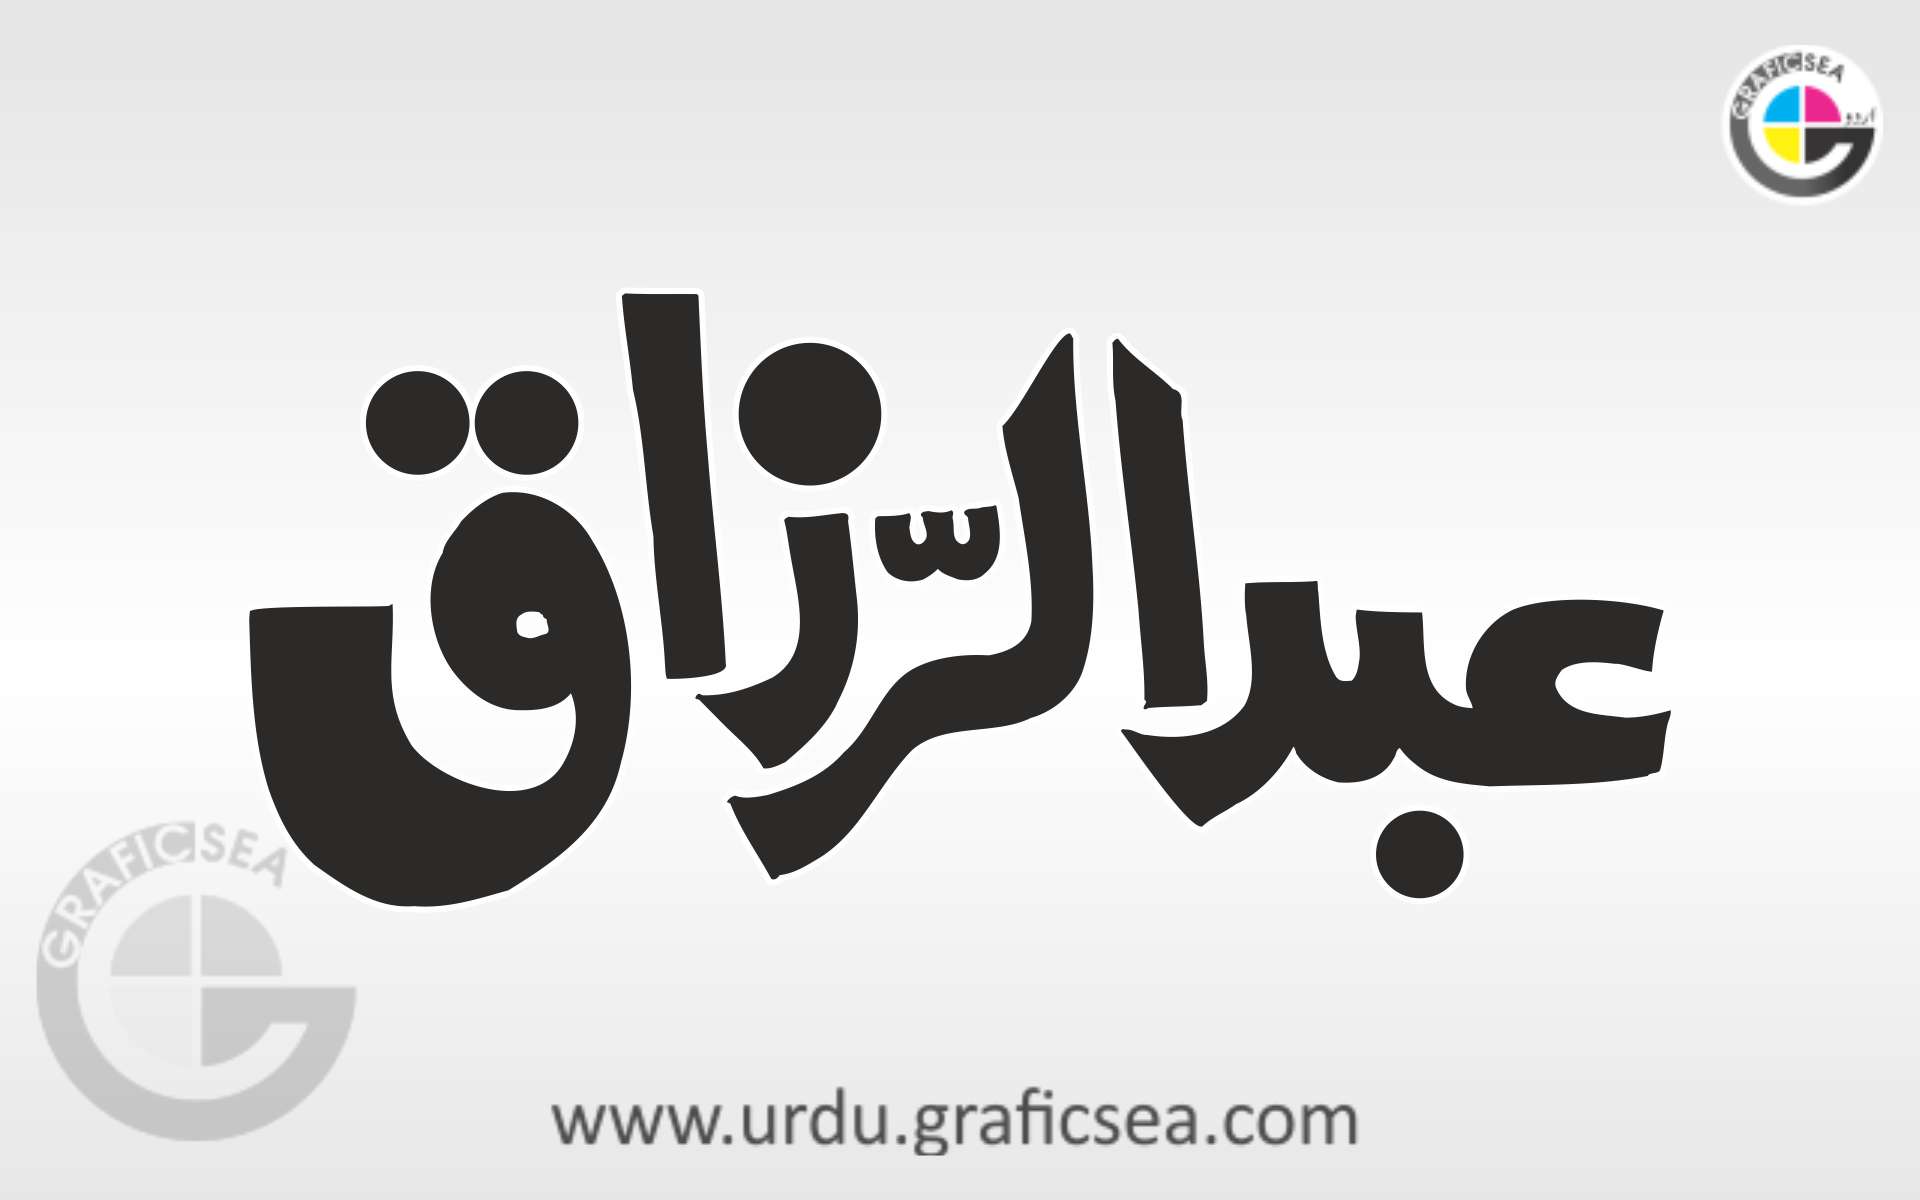 Abdul Razzaq Urdu Name Calligraphy free